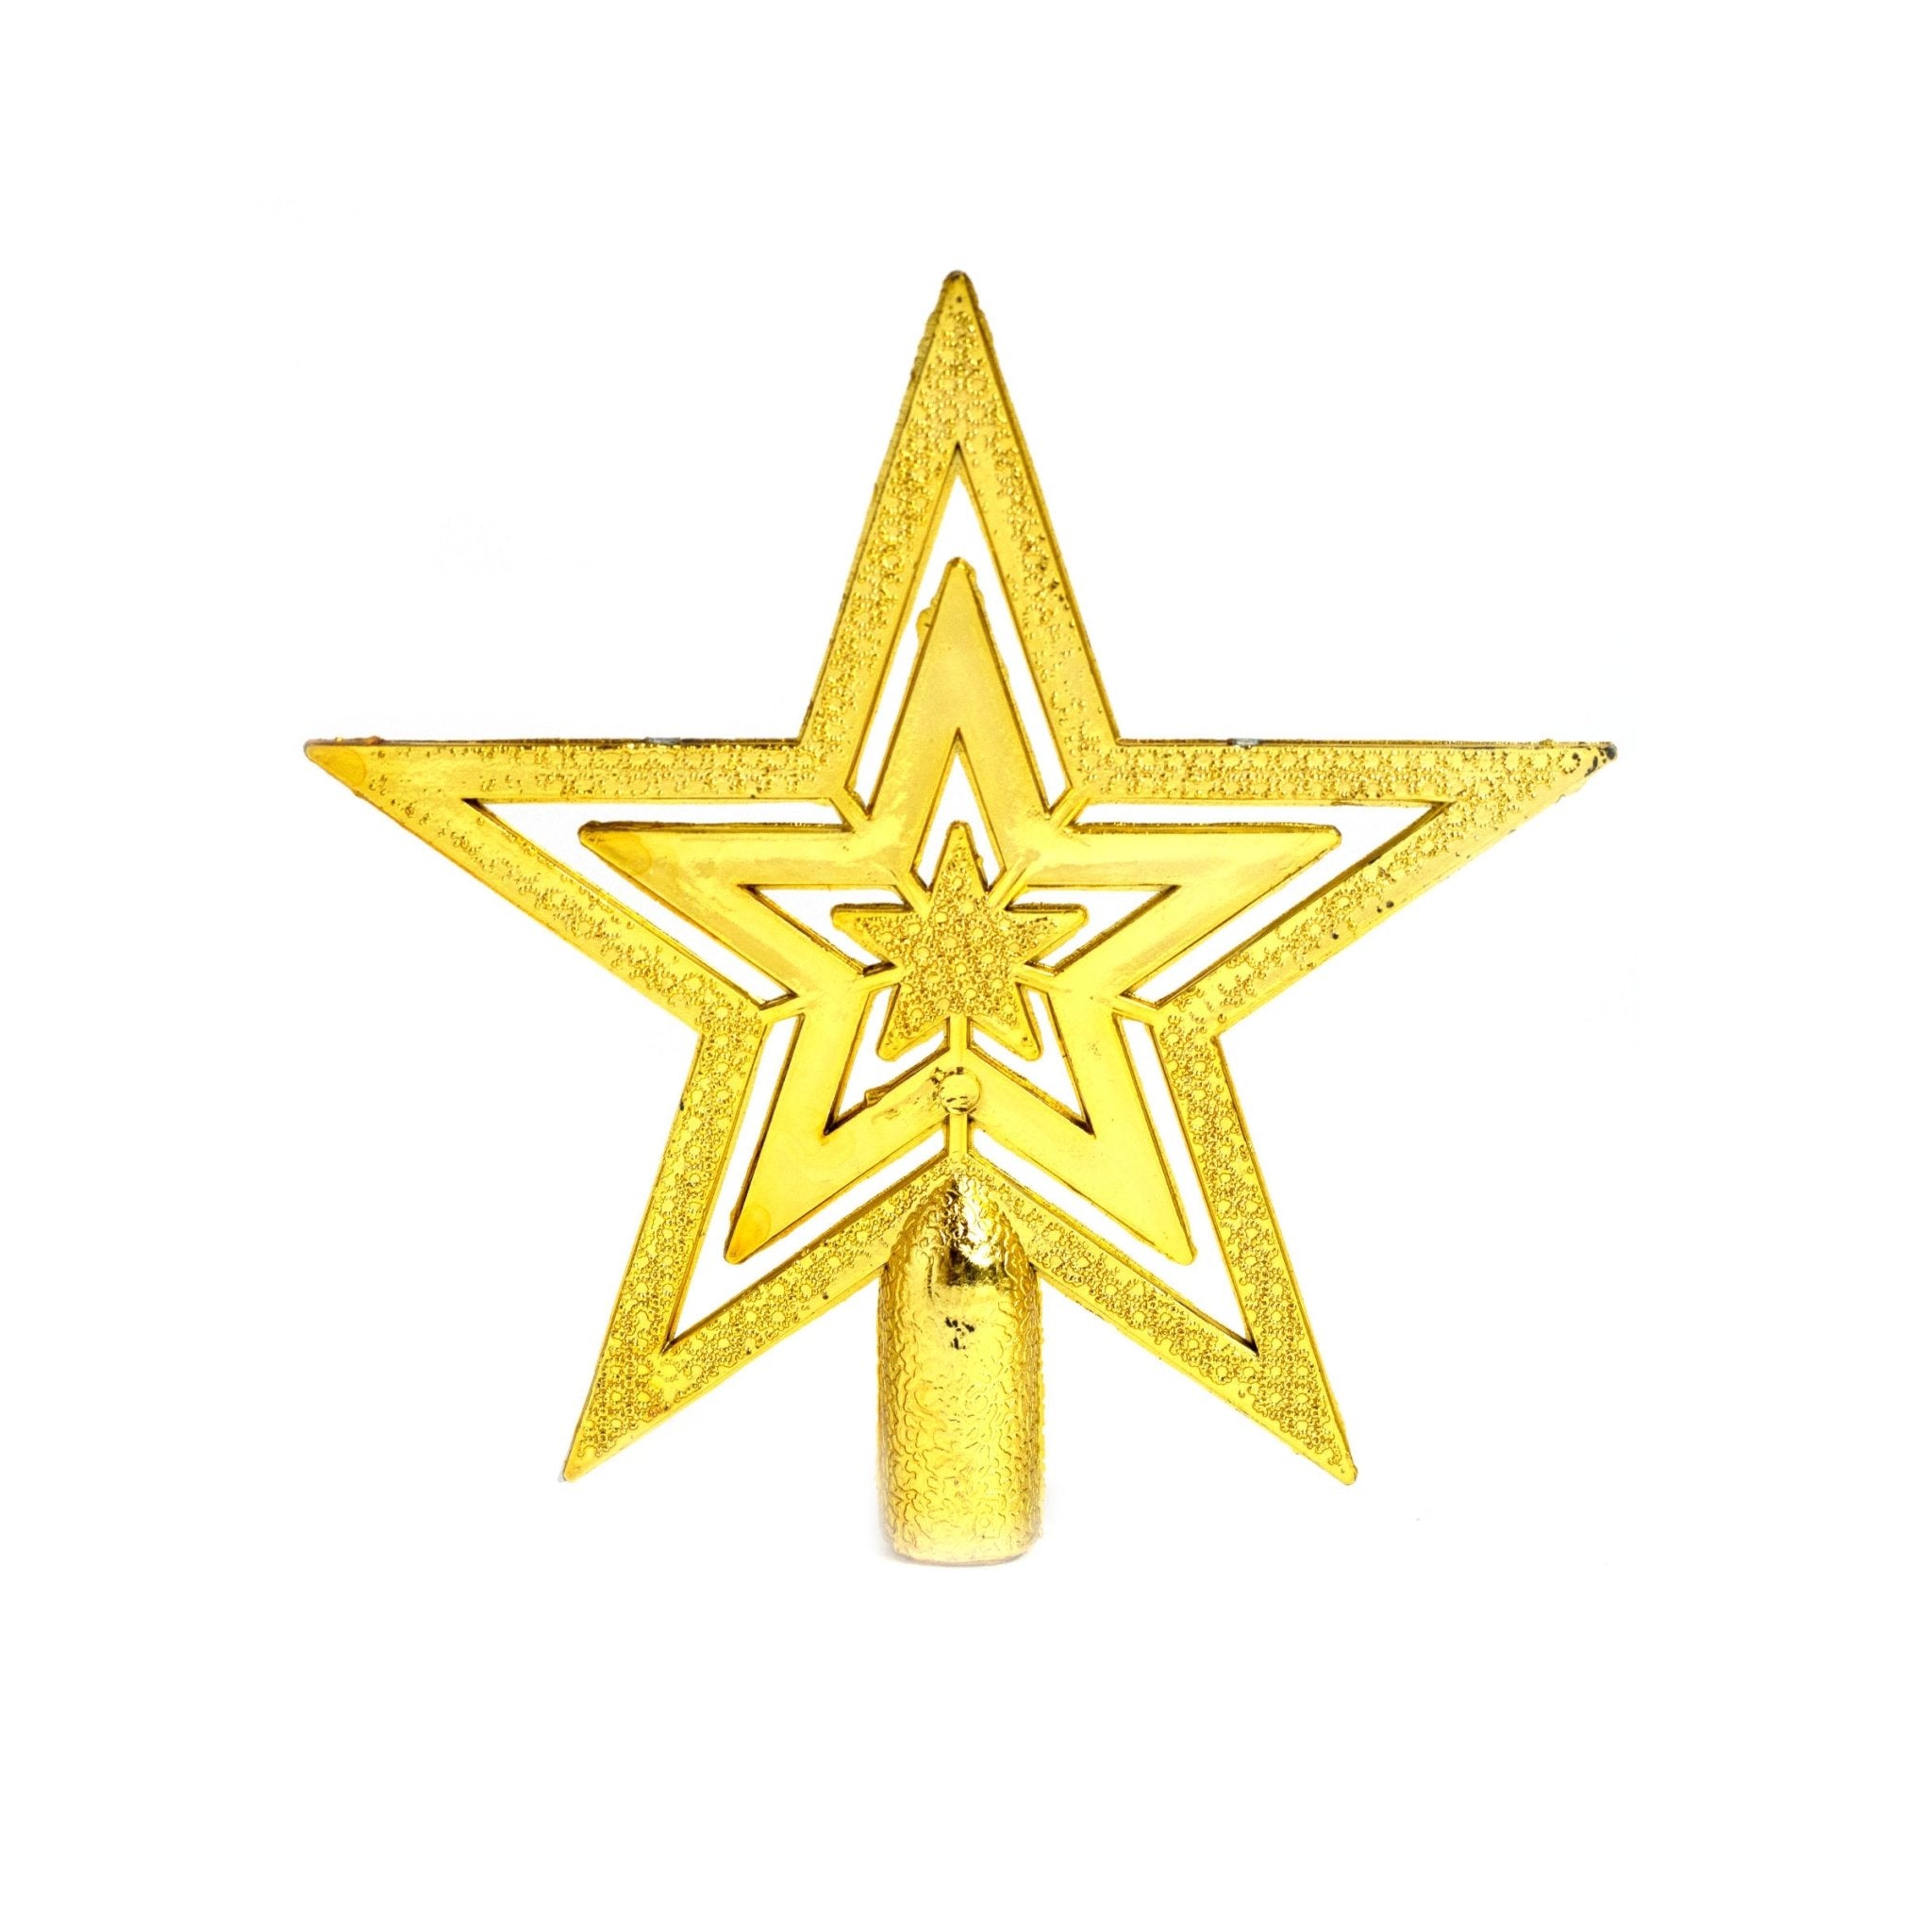 10cm 5 Pointed Star Tree Topper Gold - MODA FLORA Santa's Workshop